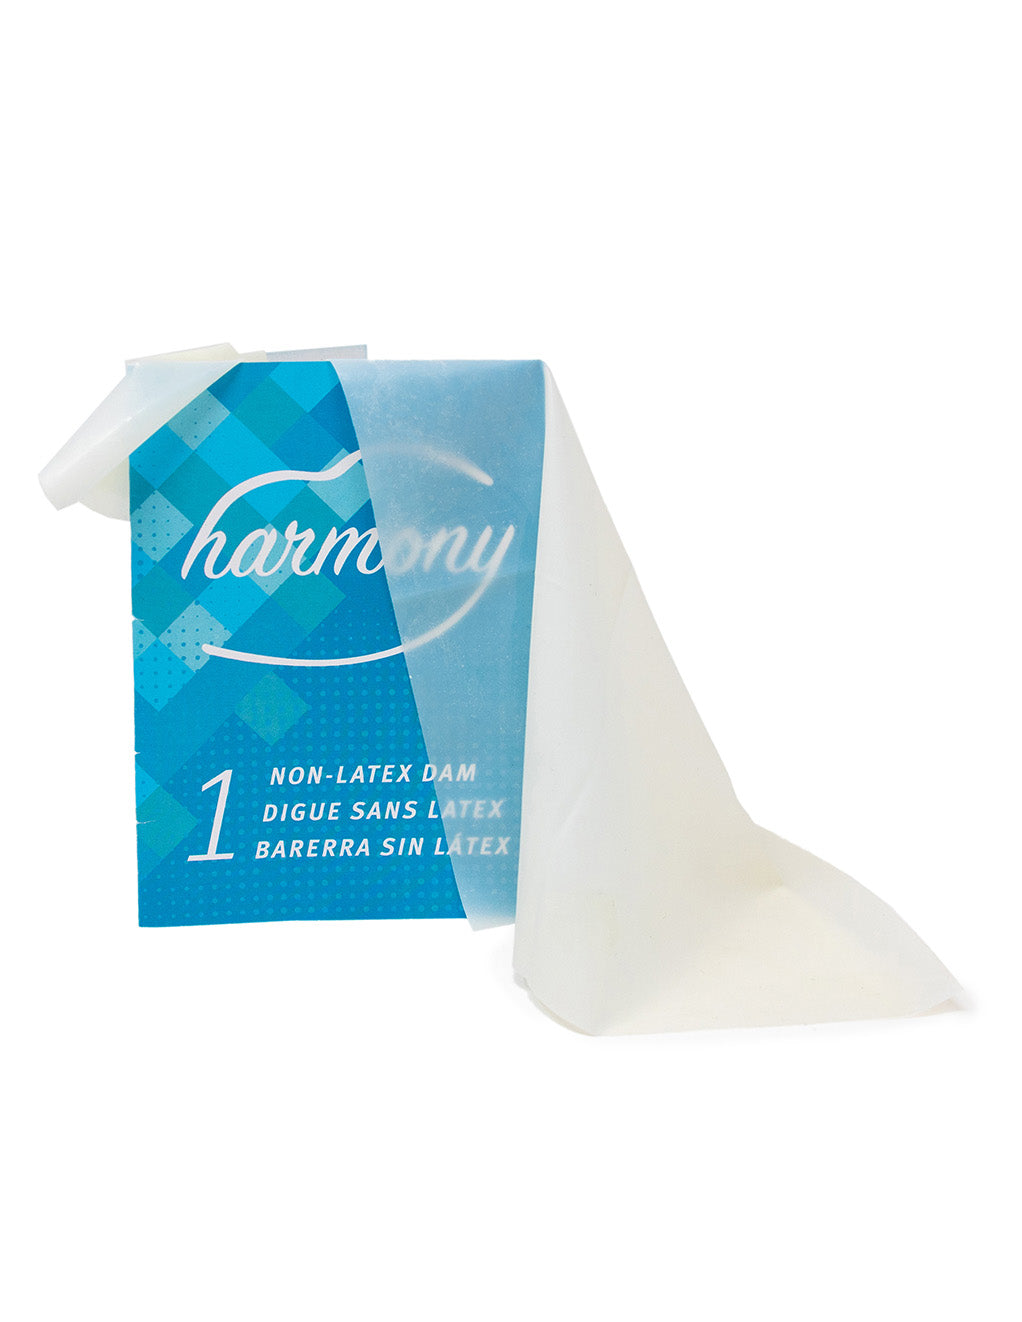 Harmony Non-Latex Dental Dam 1ct- On packaging